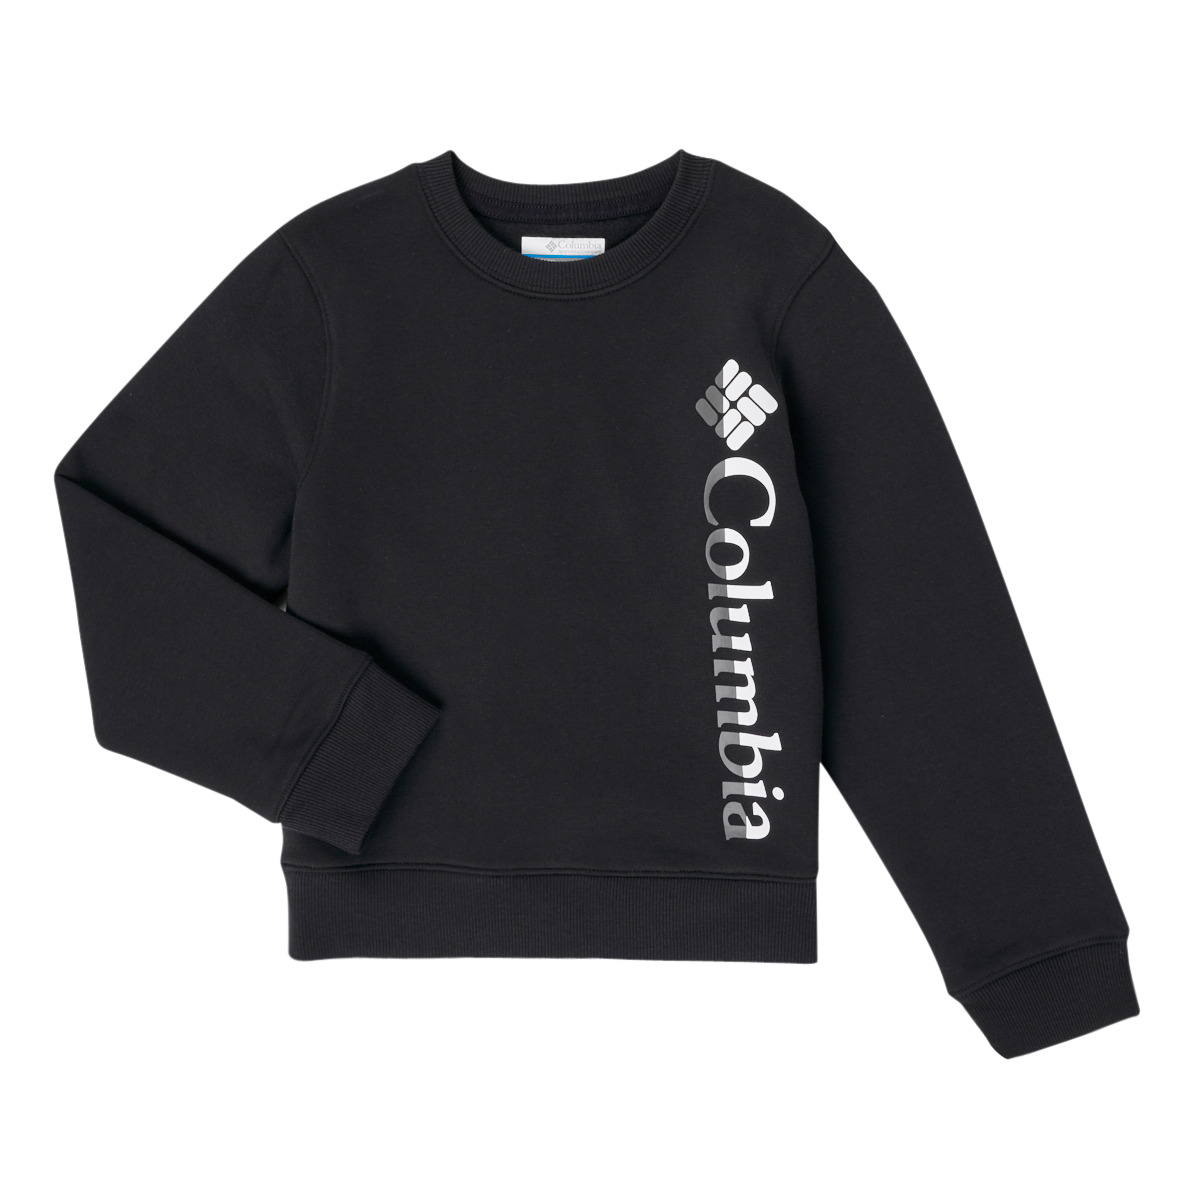 Textiel Meisjes Sweaters / Sweatshirts Columbia COLUMBIA PARK FRENCH TERRY CREW Zwart